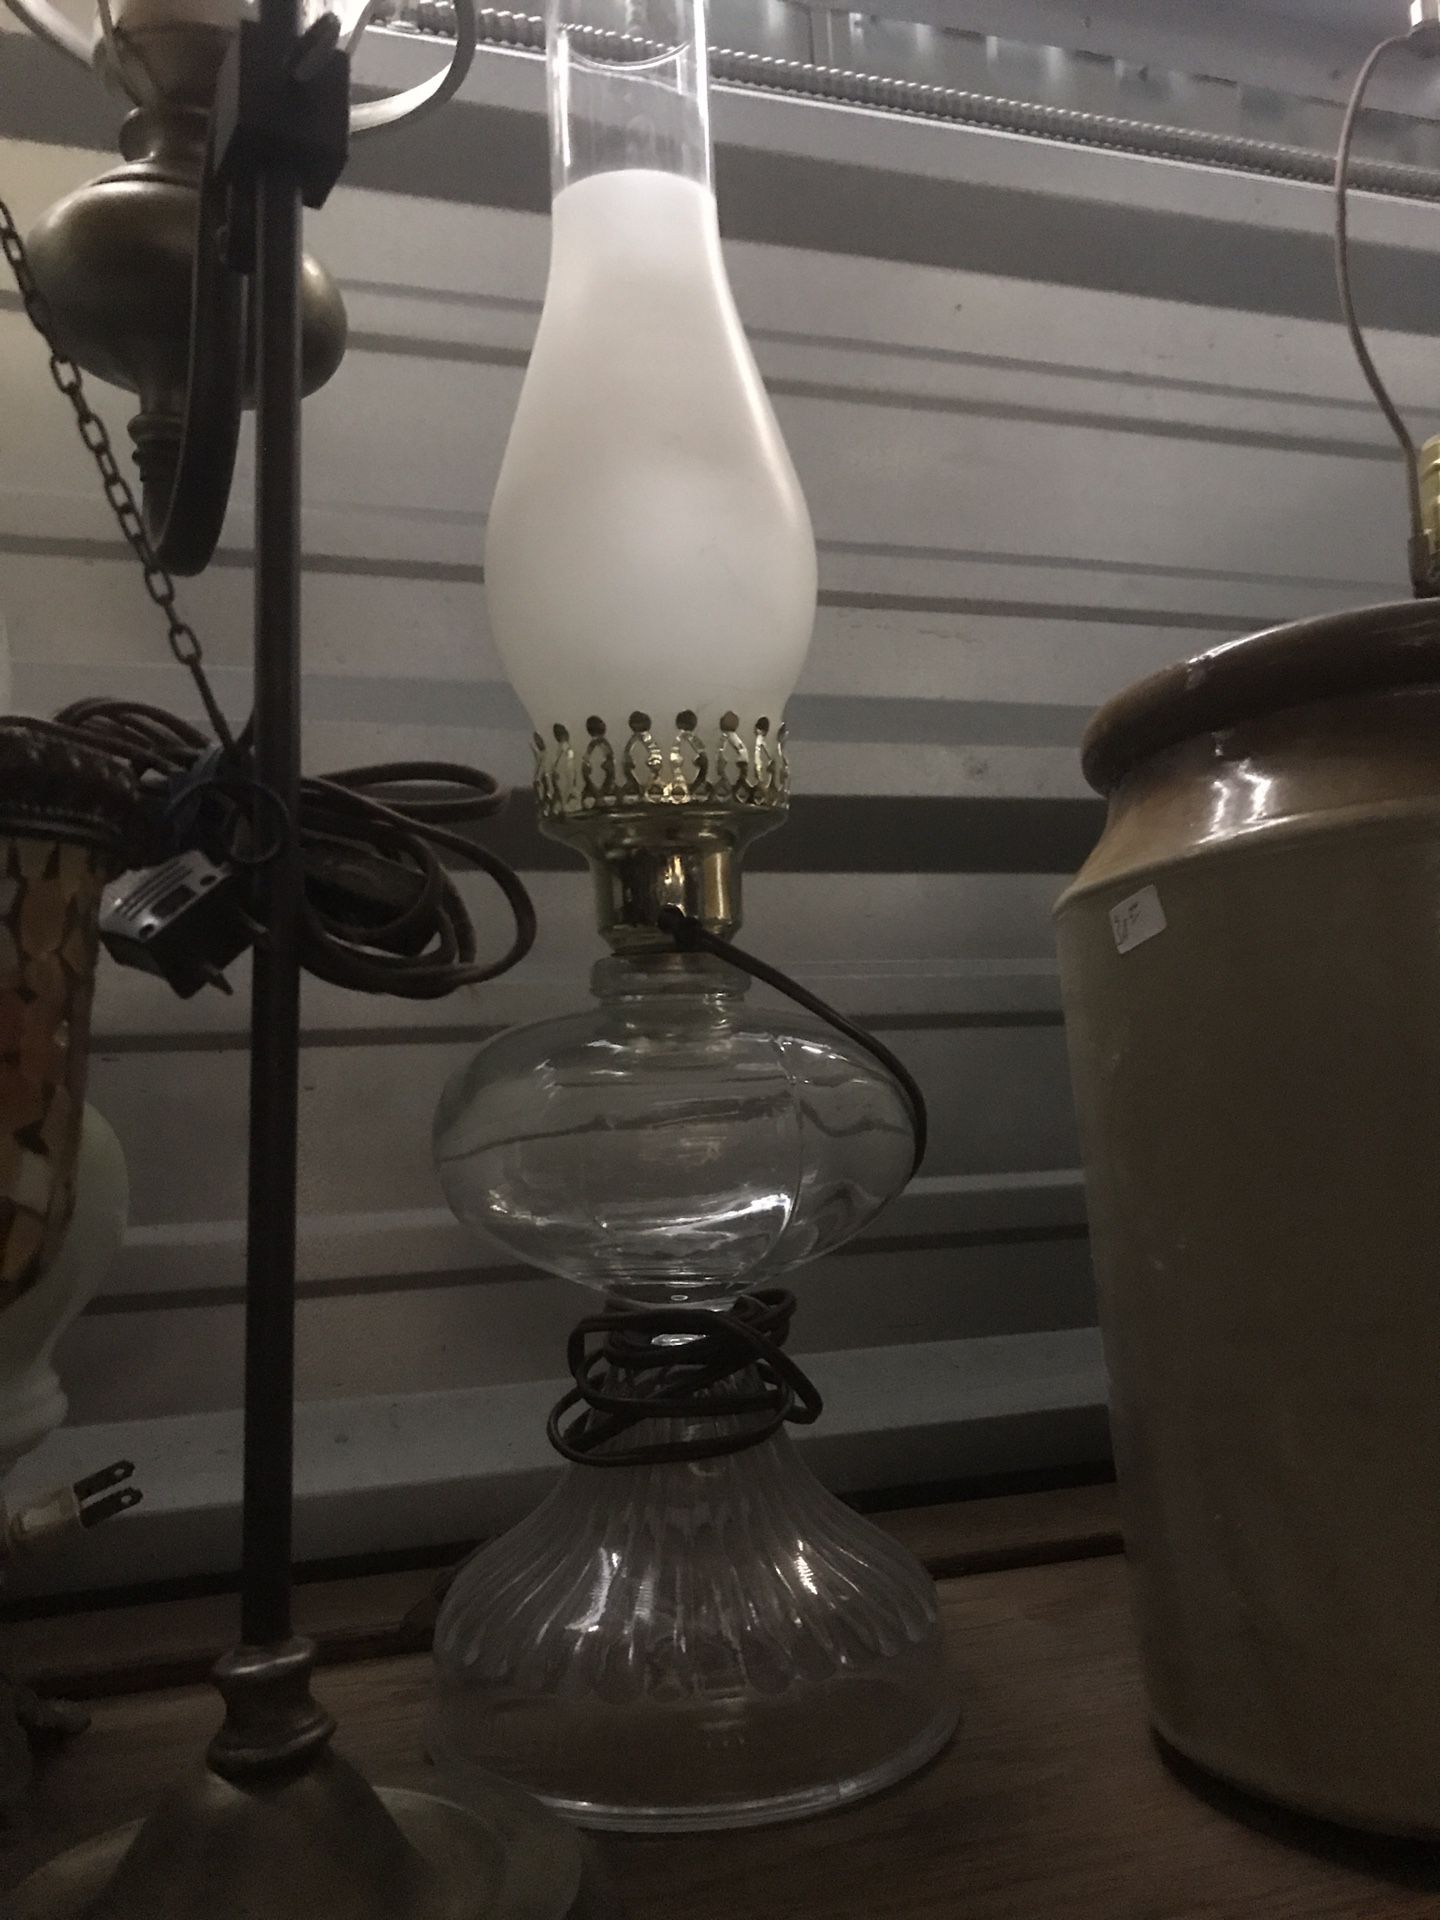 Antique electric oil lamp